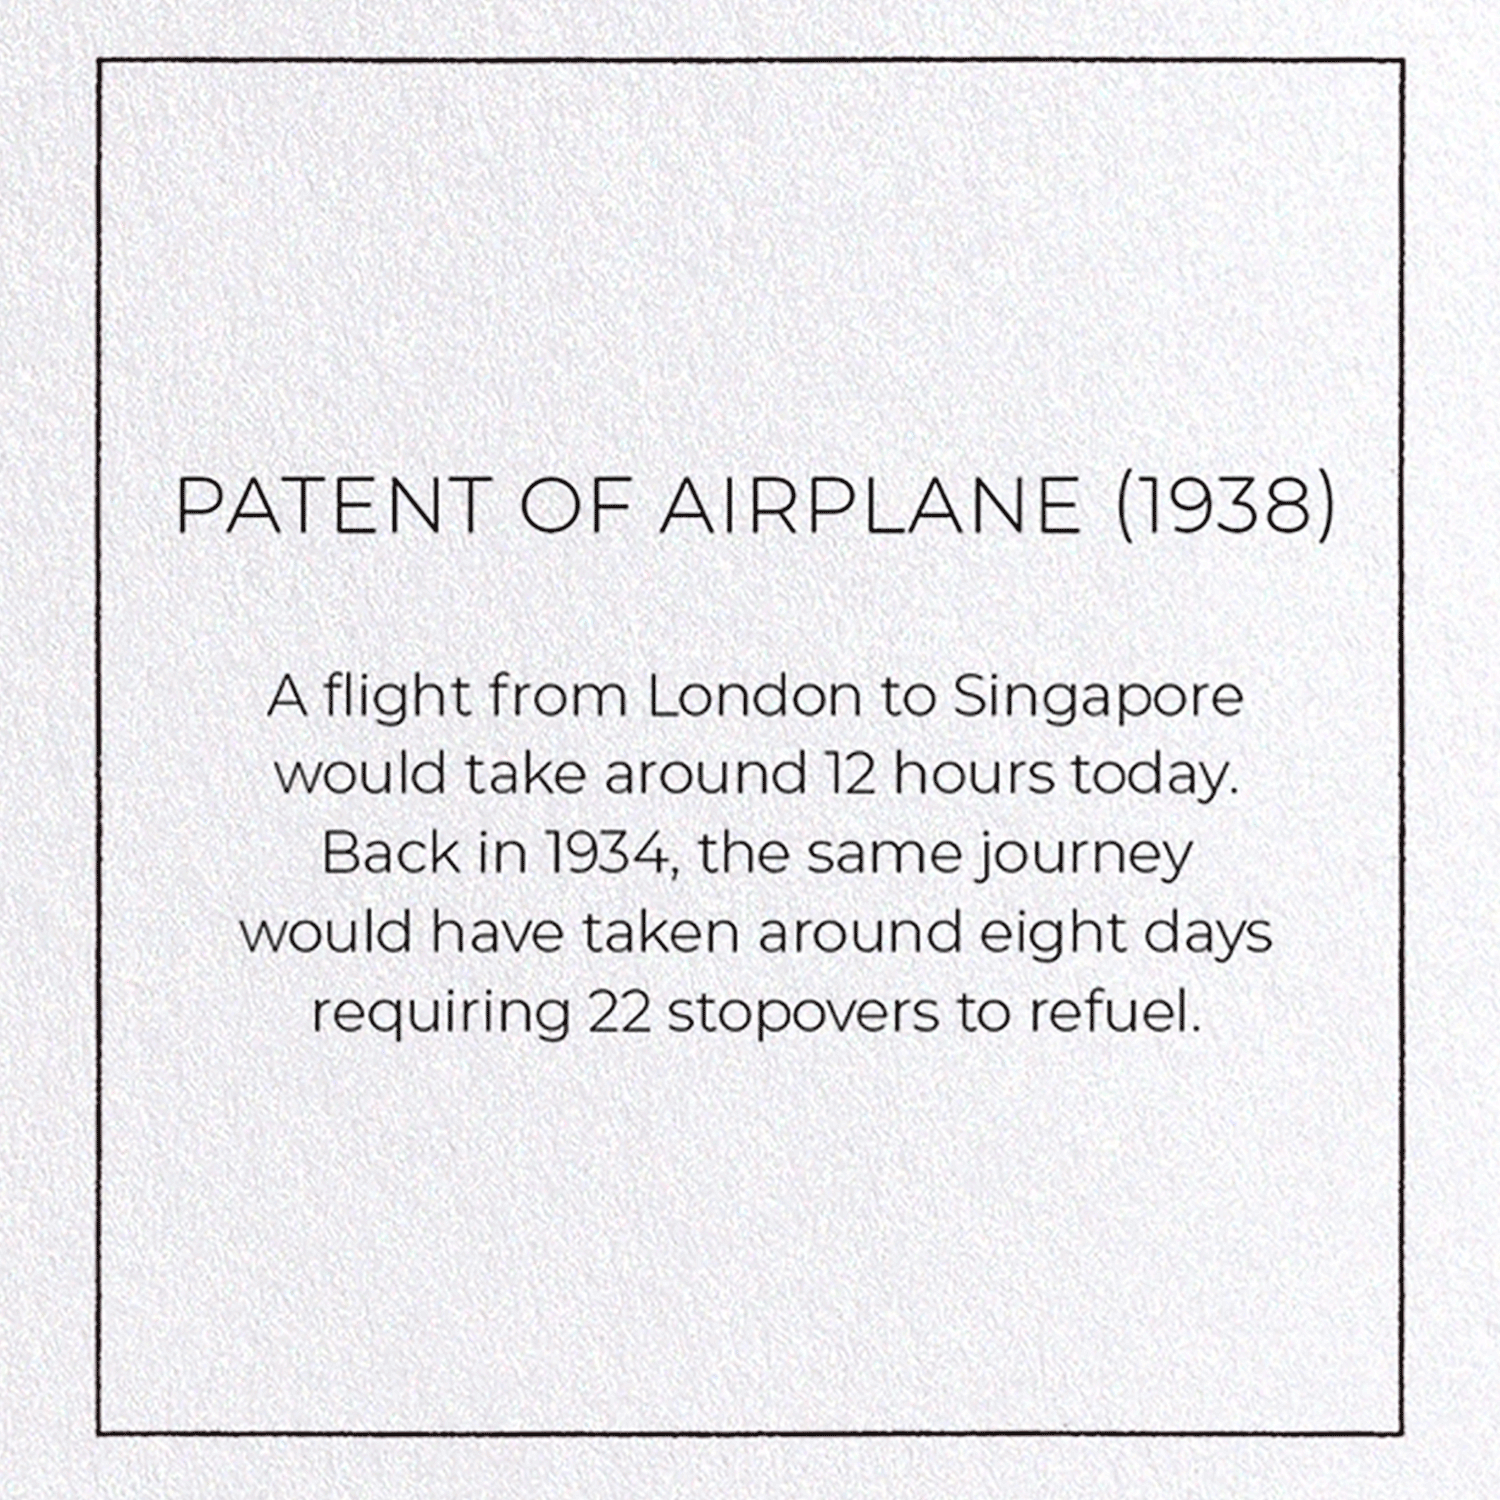 PATENT OF AIRPLANE (1938)